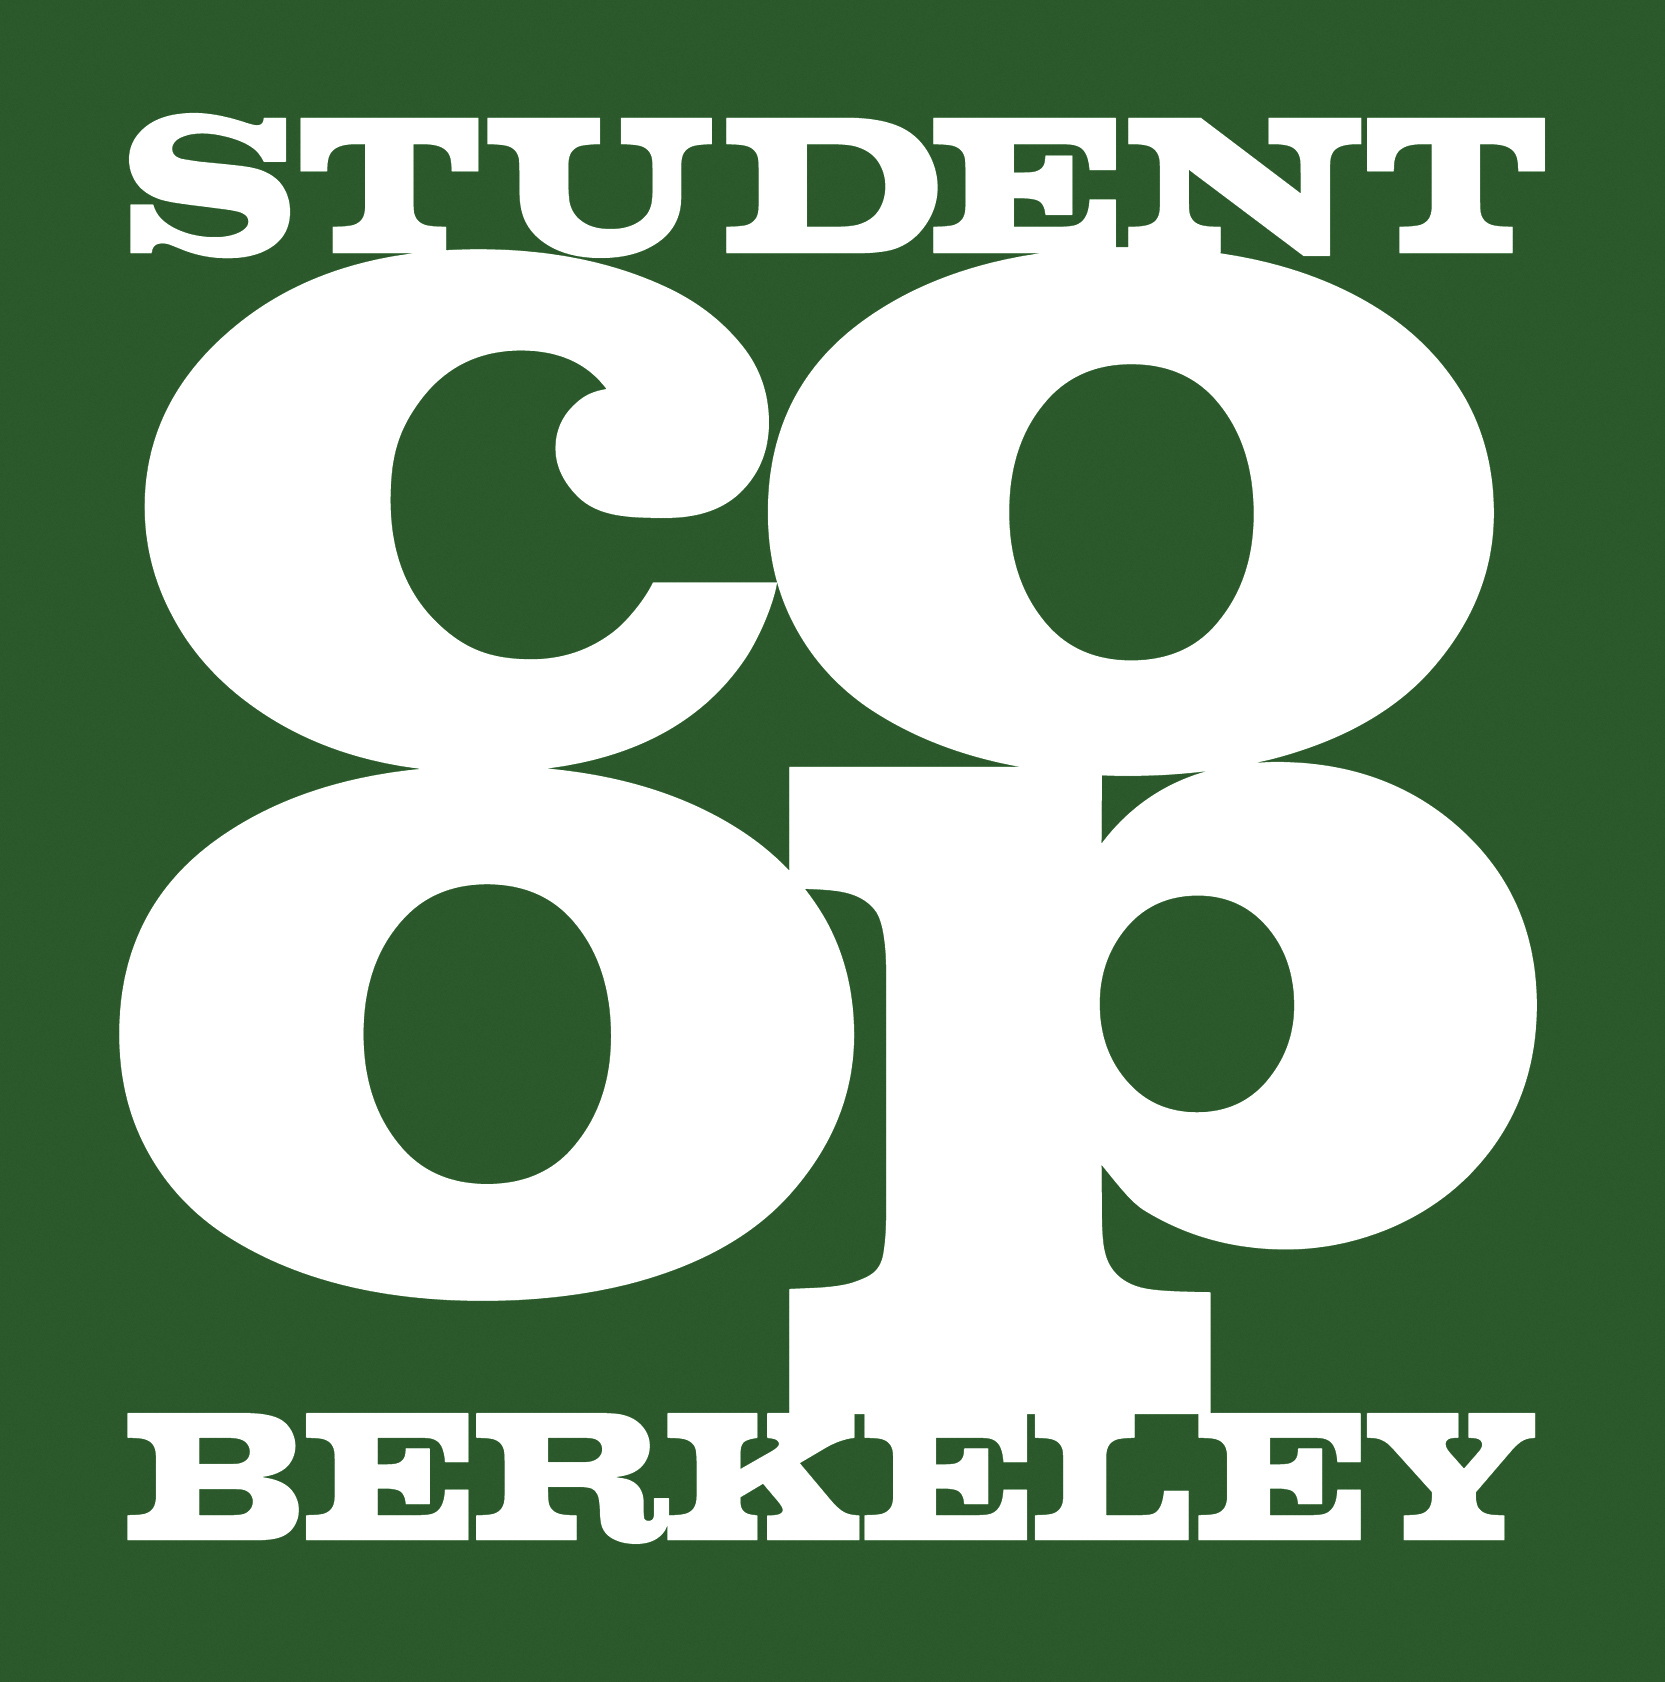 Berkeley Student Cooperative logo